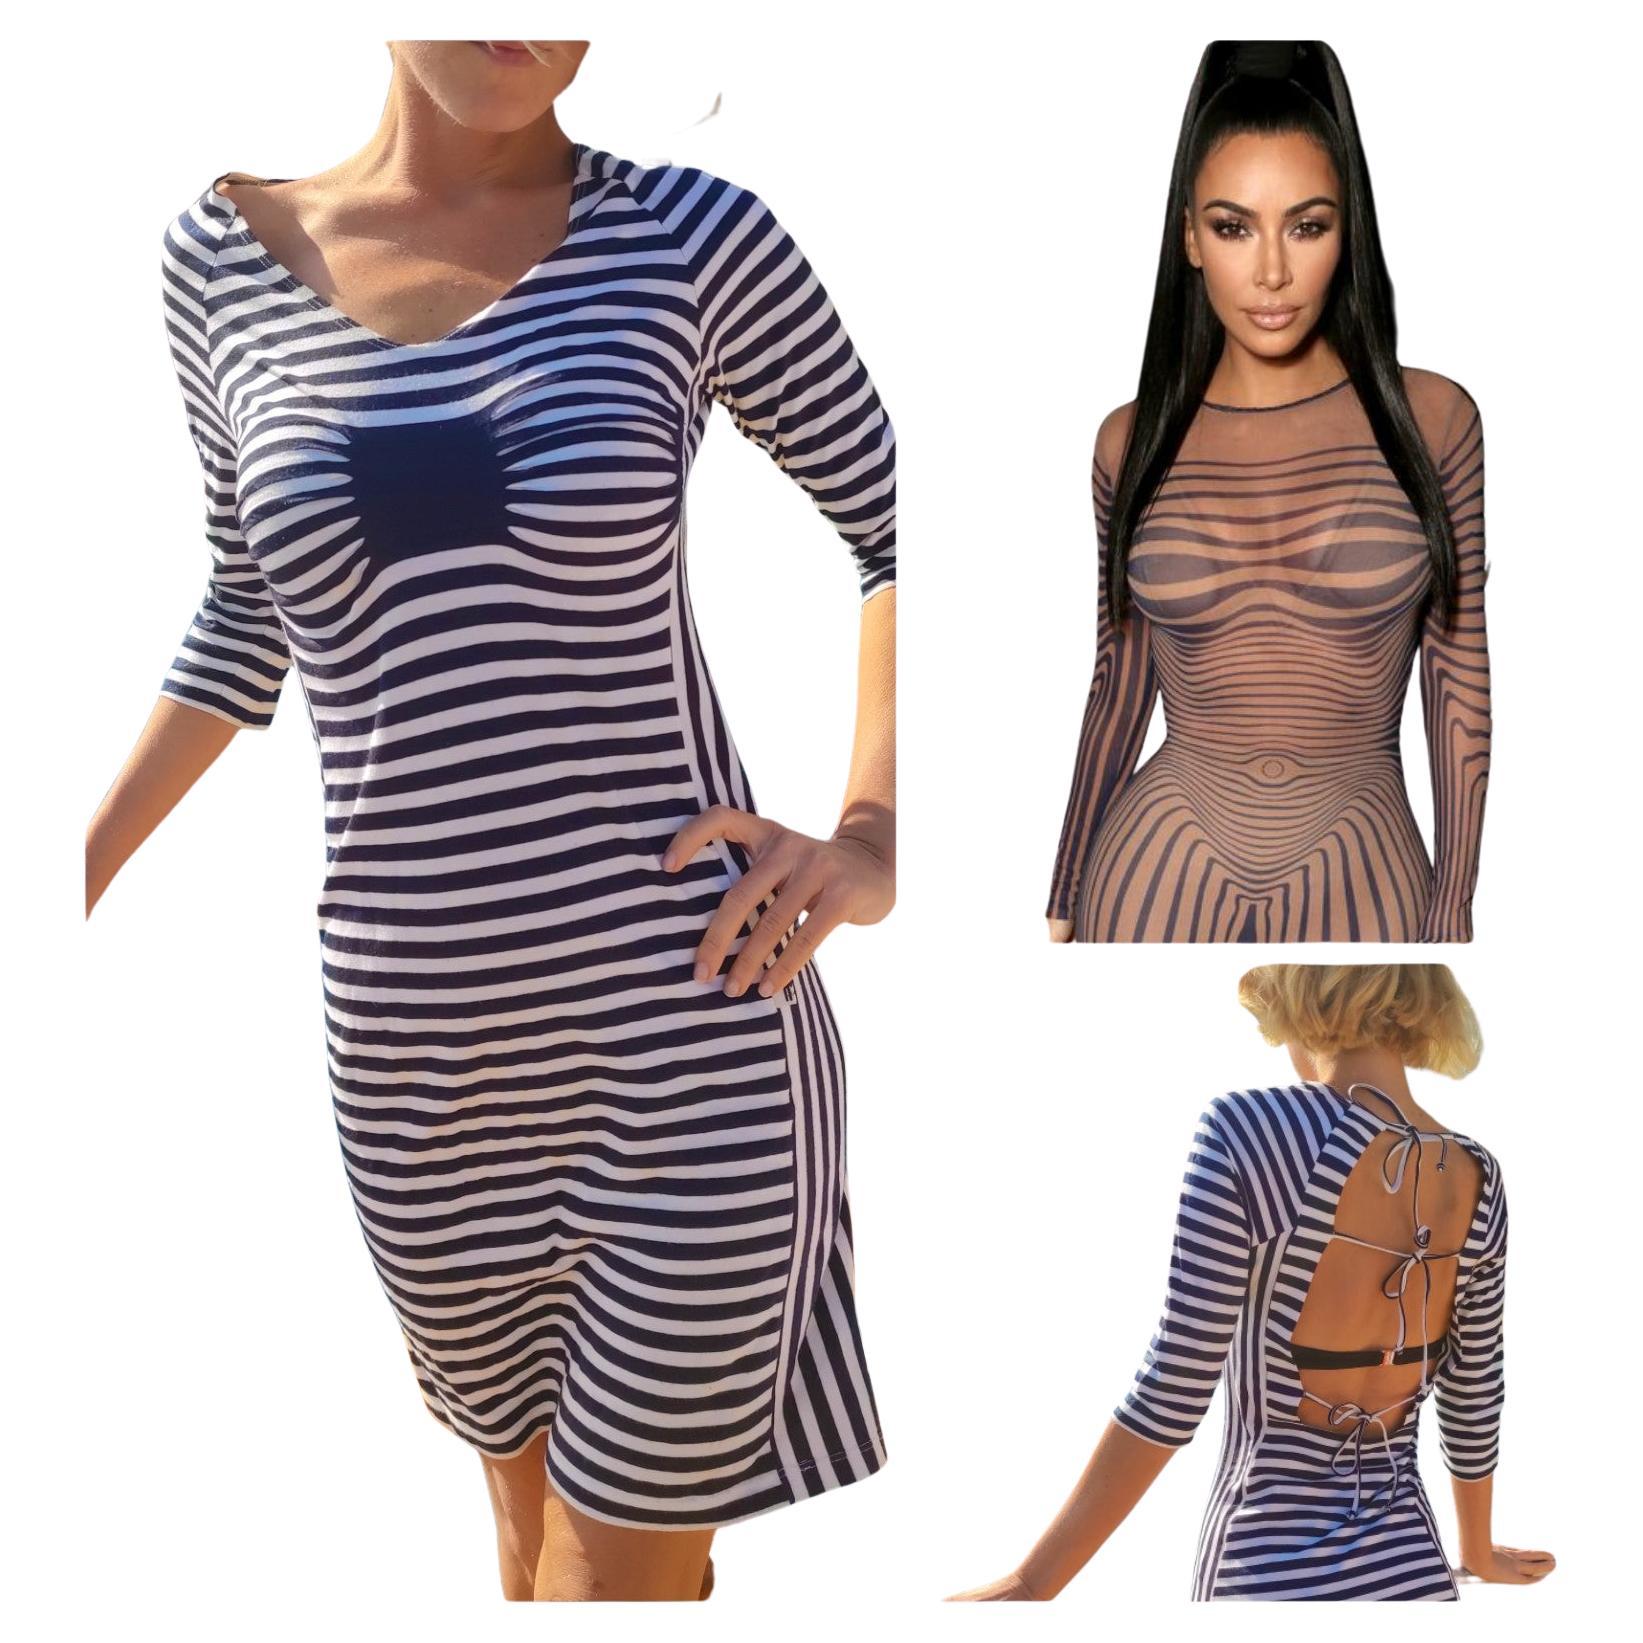 Jean Paul Gaultier Optical Illusion Striped Body Map Kim Kardashian Dress